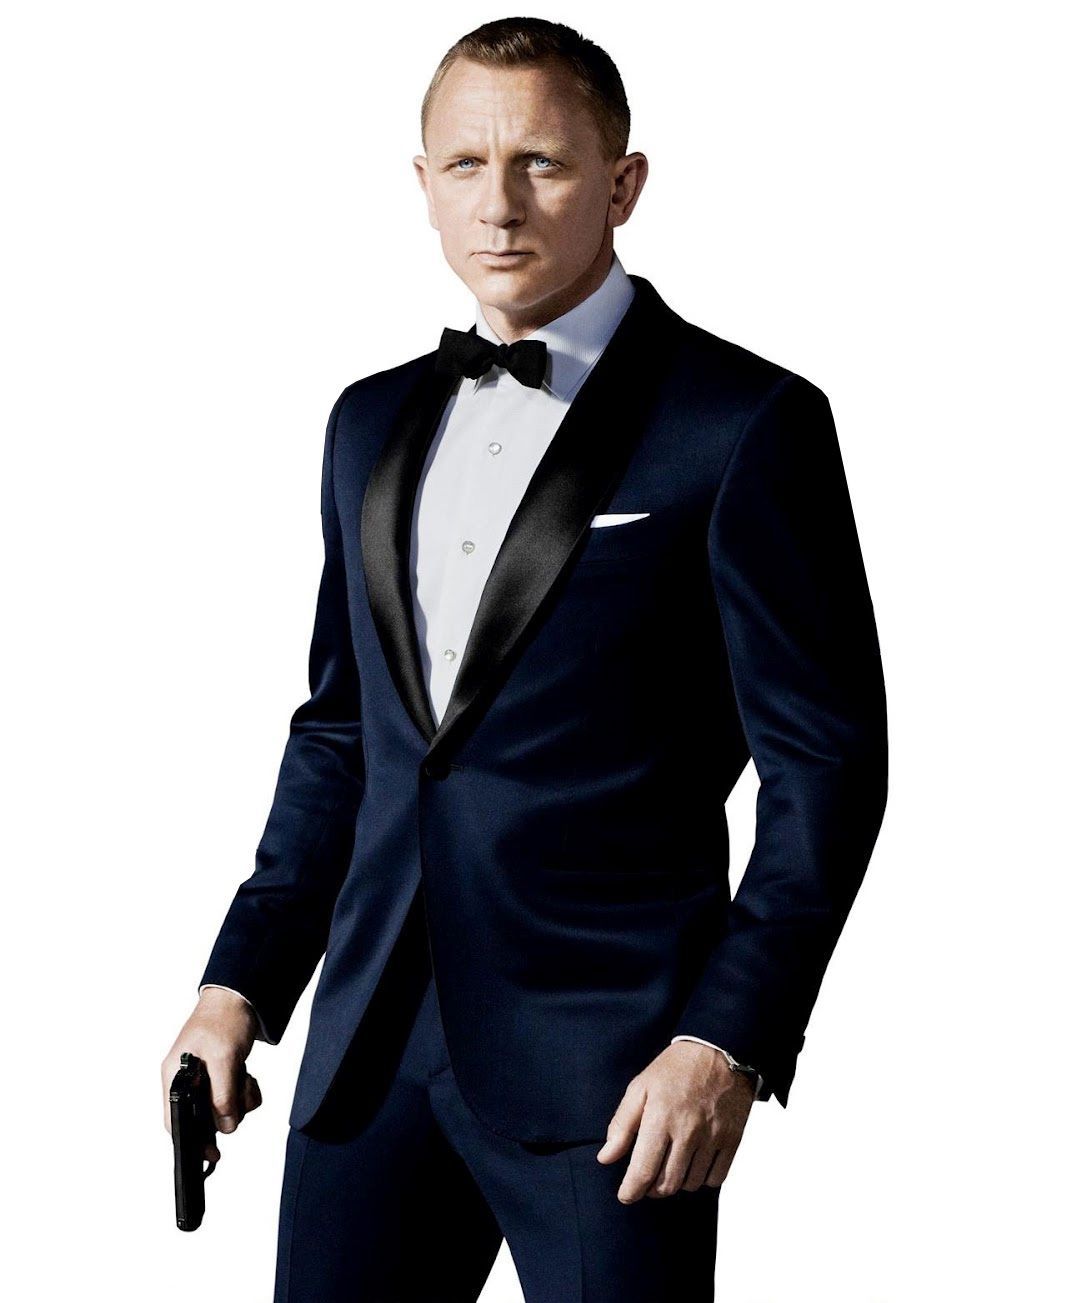 James Bond Blue Suit Skyfall - wallpaper.